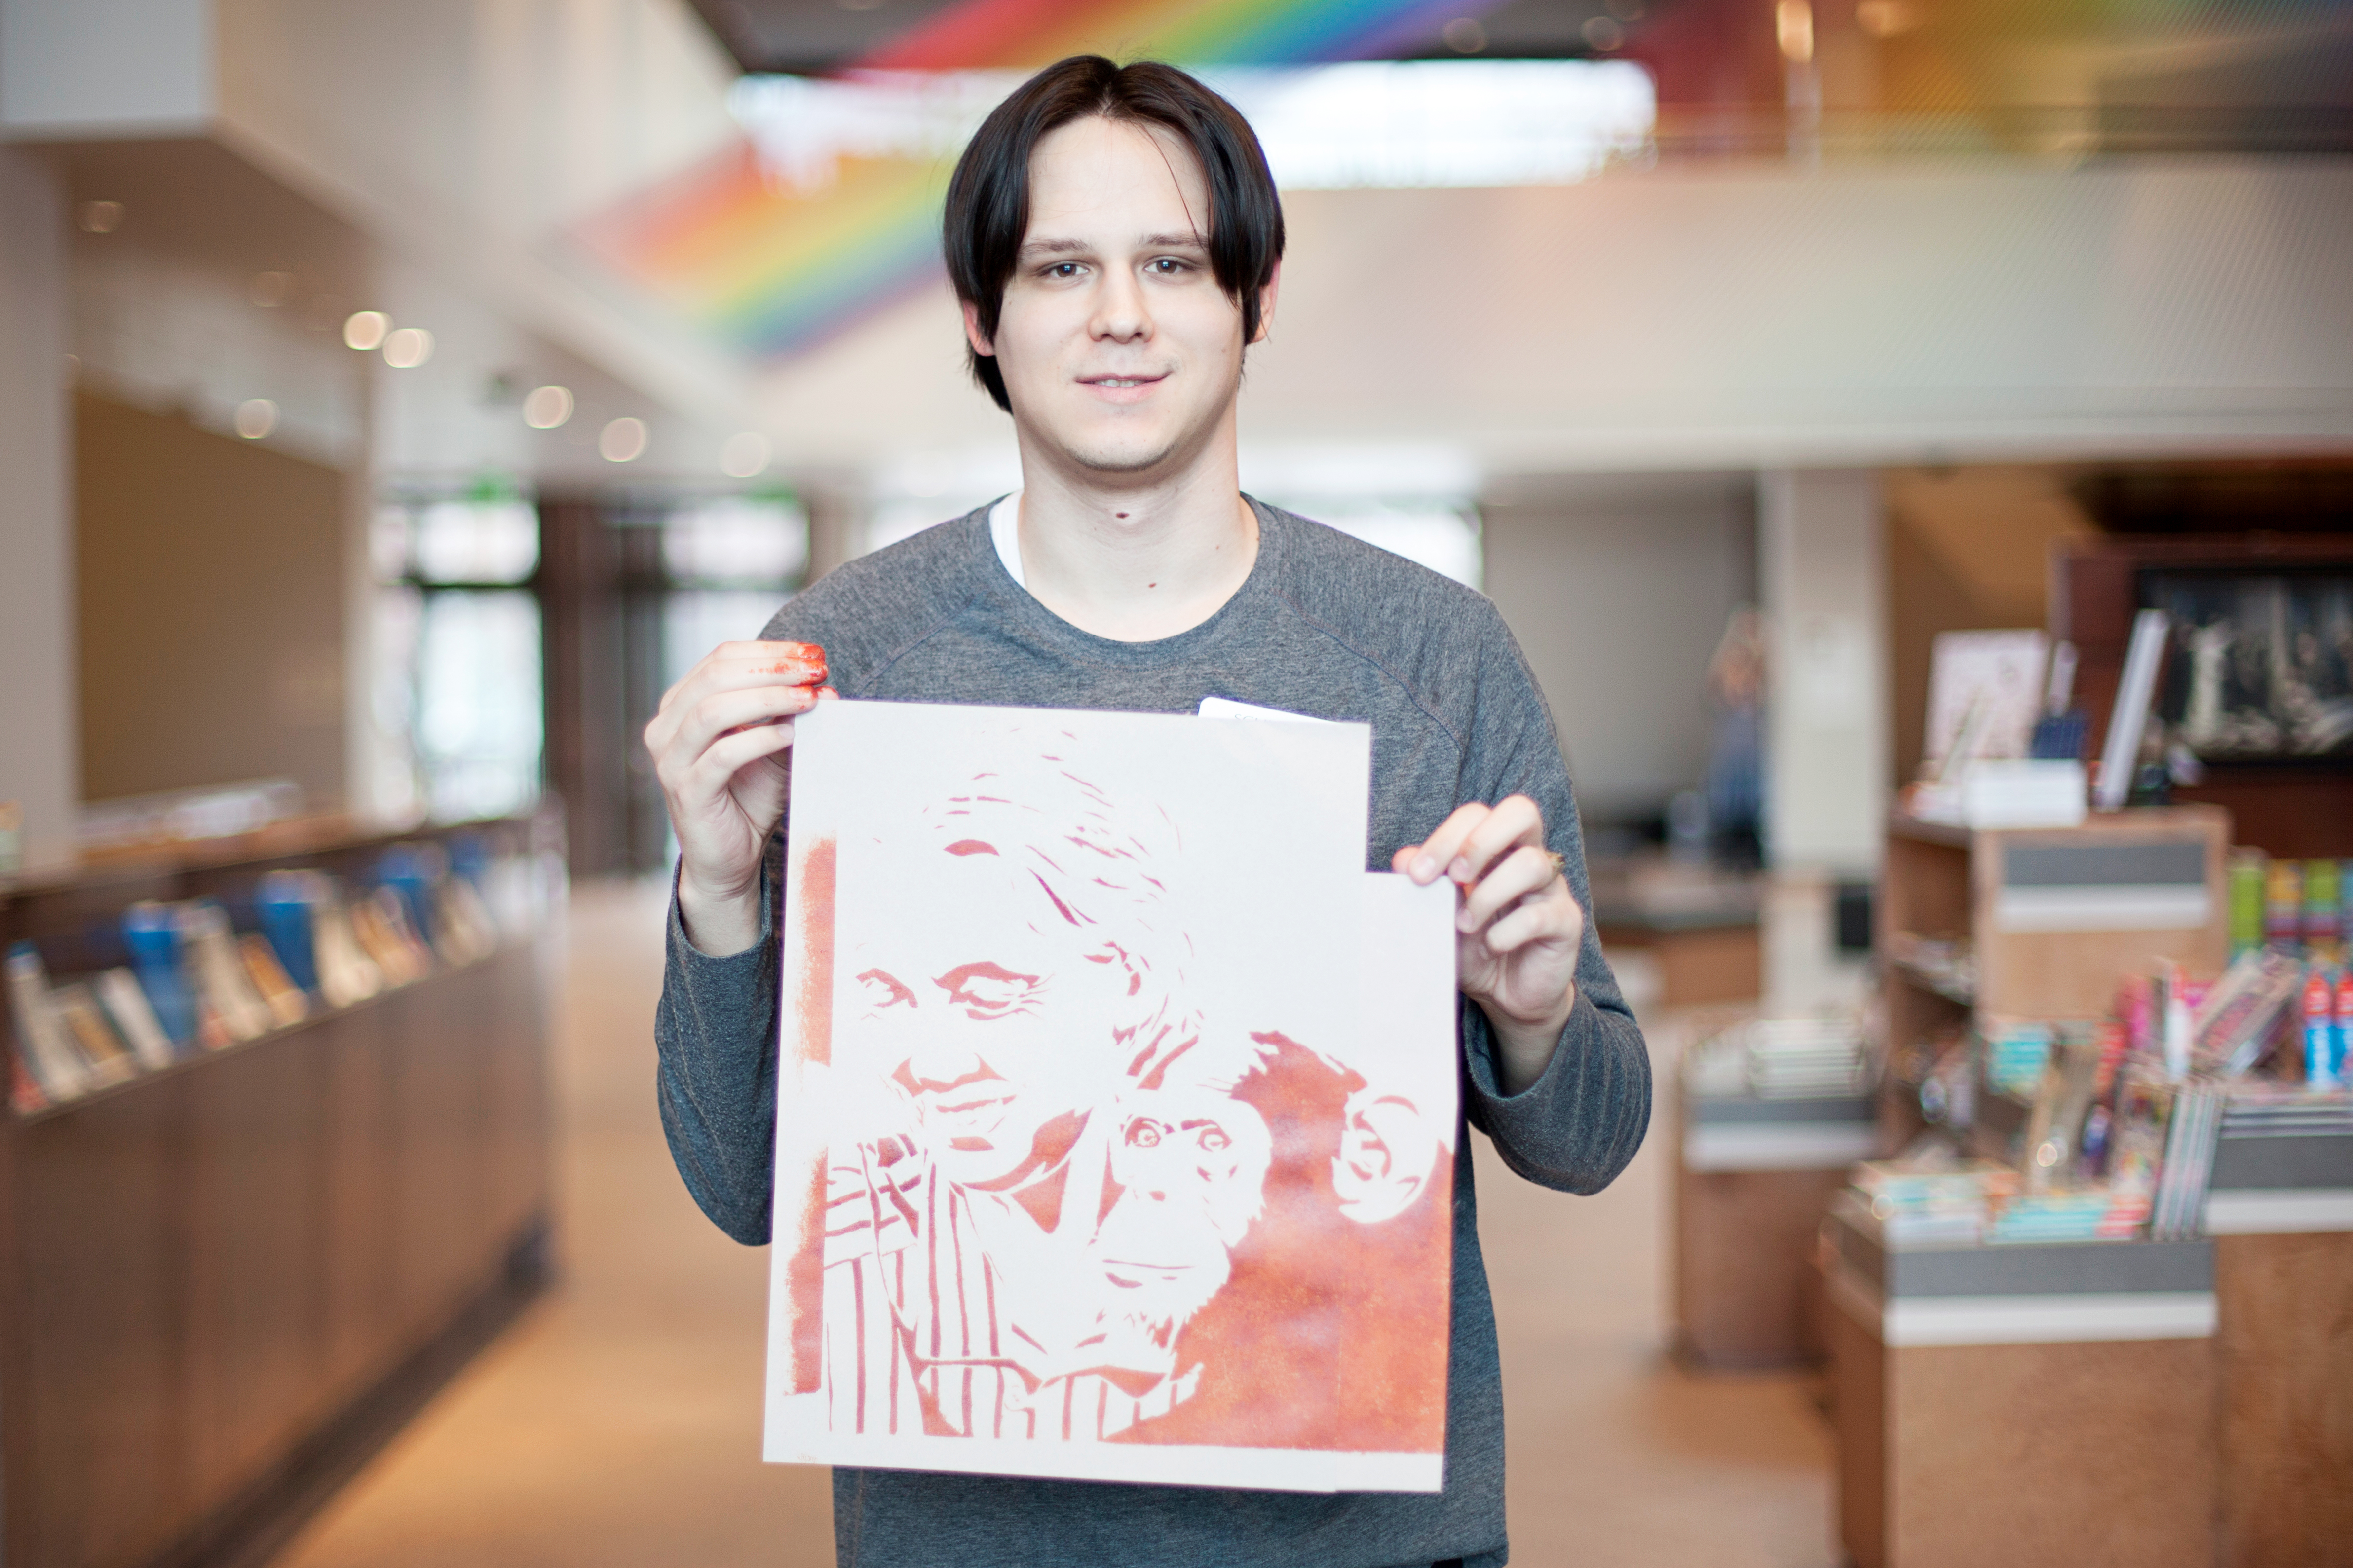 Schuyler Finley hold his stencil of Jane Goodall